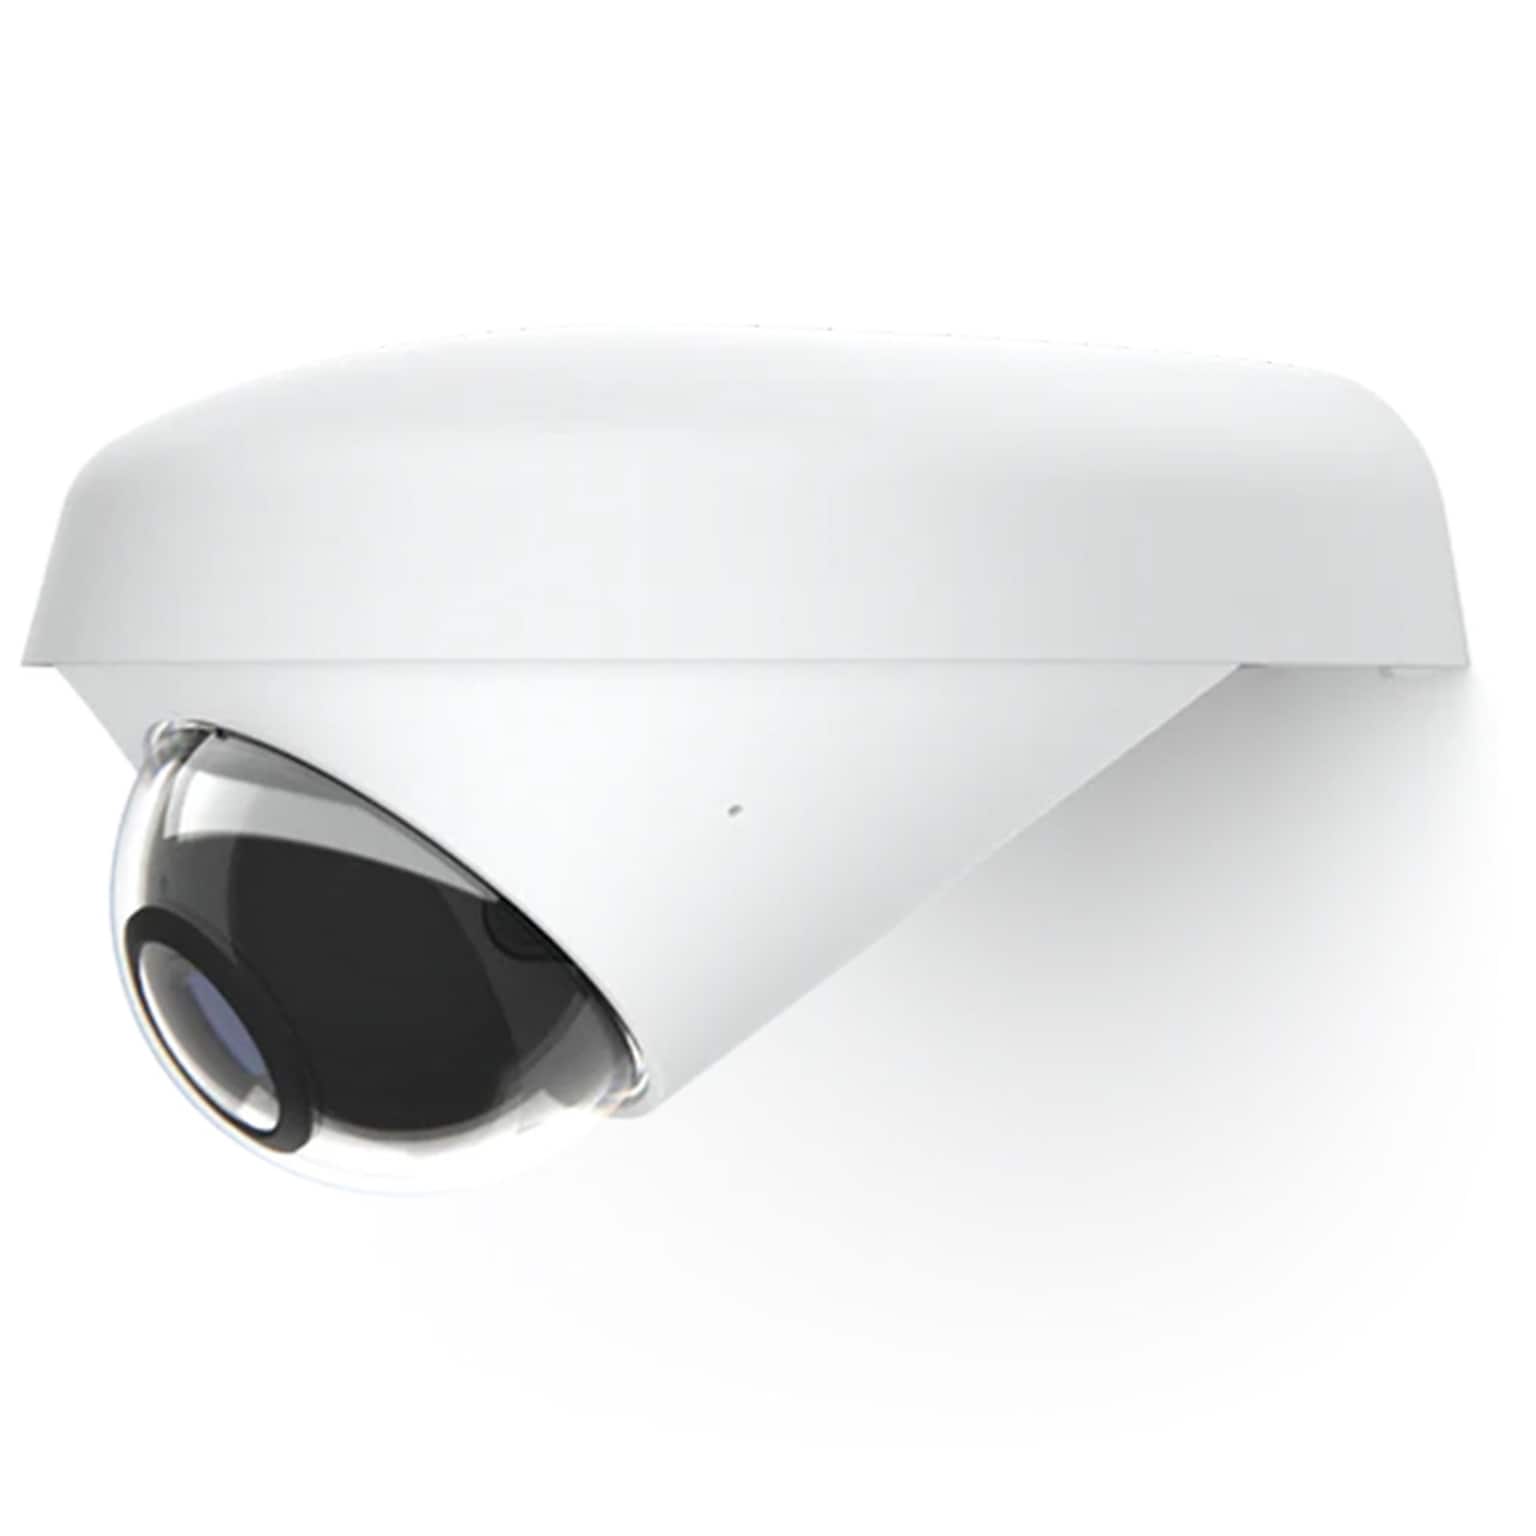 Ubiquiti UniFi Outdoor G4 Dome Camera Arm Mount, White (UACC-G4)